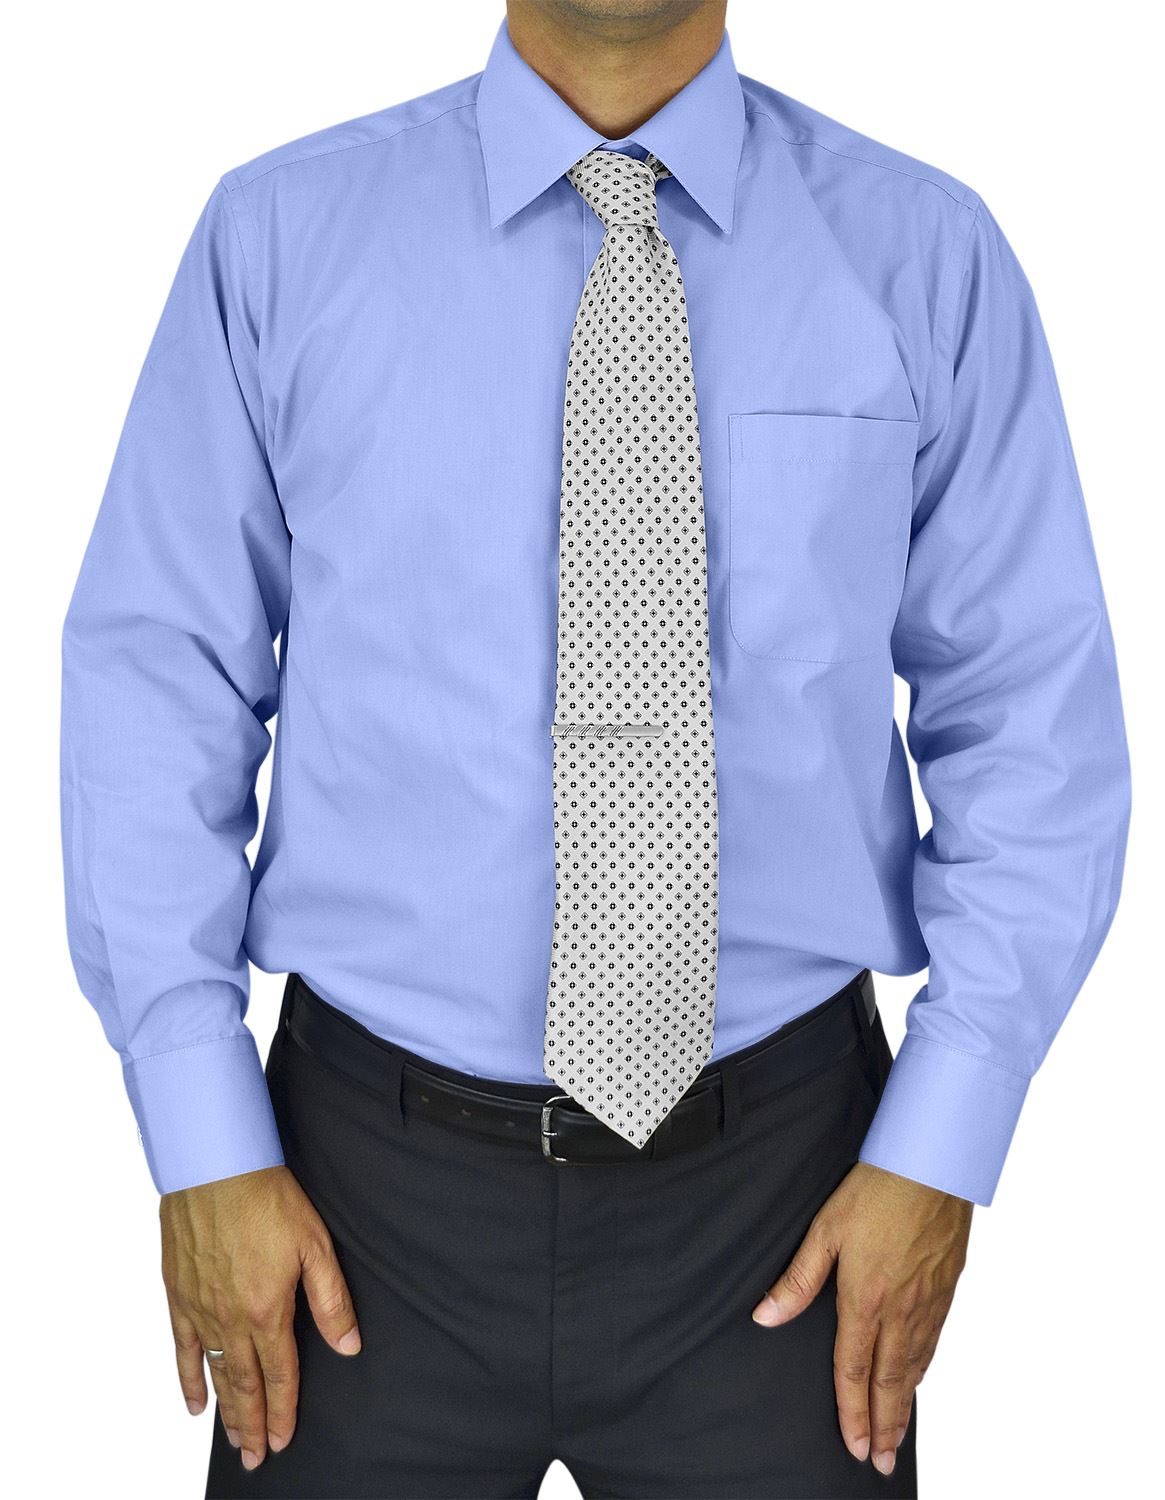 Moda Di Raza Mens Dress Shirt, French Cuff Shirt, Slim and Regular Fit, Dress Shirt For Men, Cufflink Shirts For Men - Baby Blue-Reg-Fit 14.5